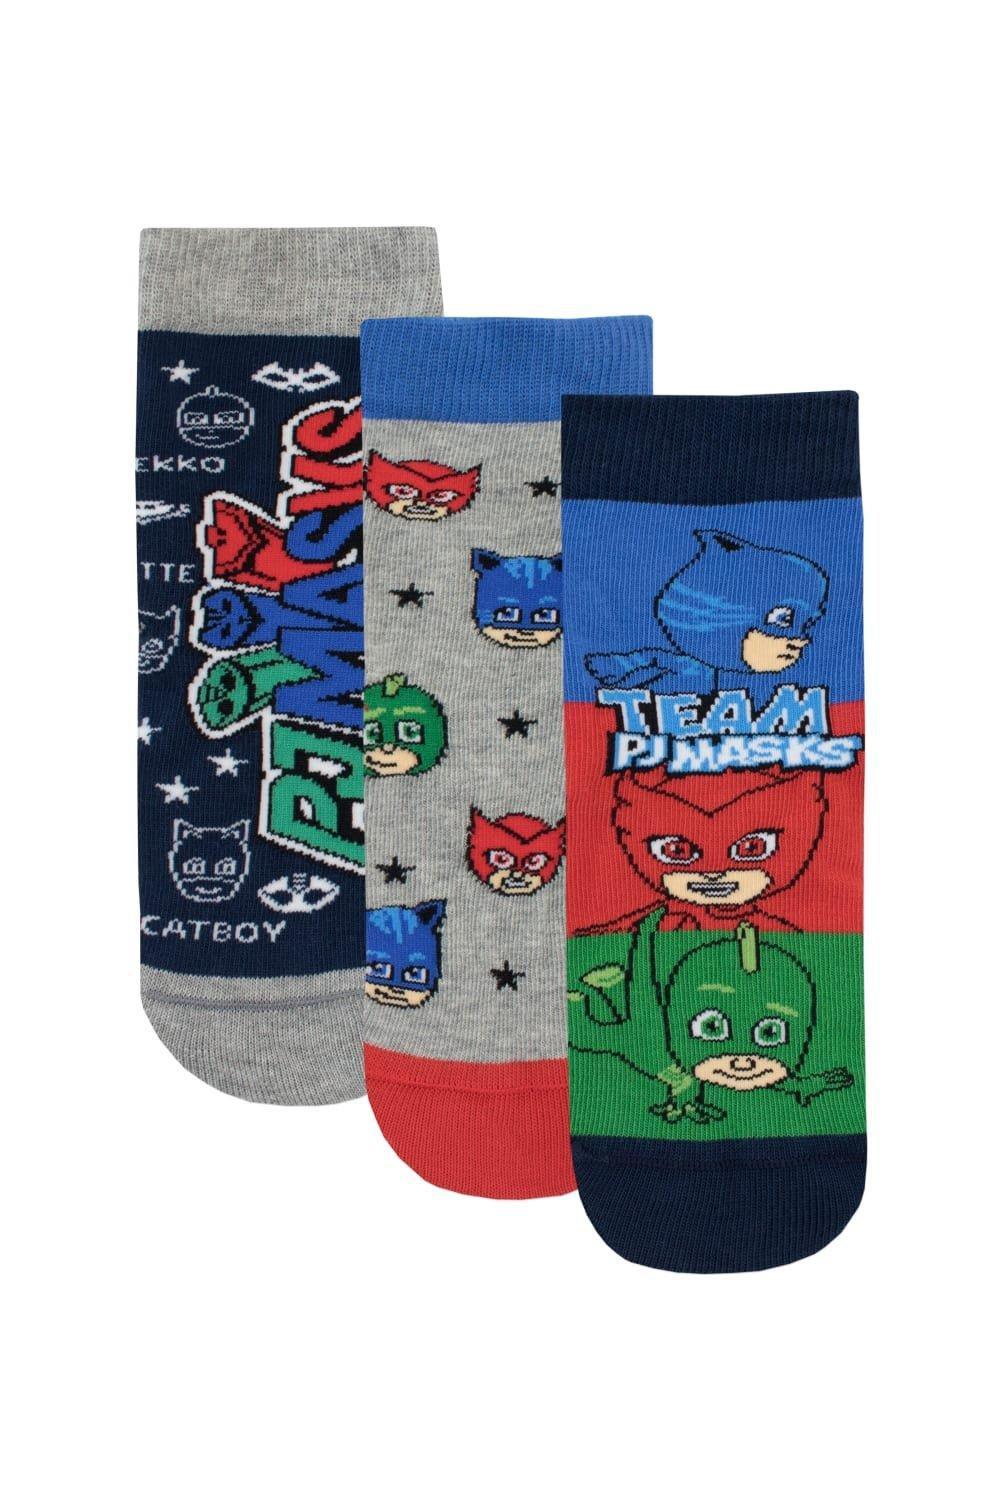 Catboy Owlette And Gekko Socks 3 Pack